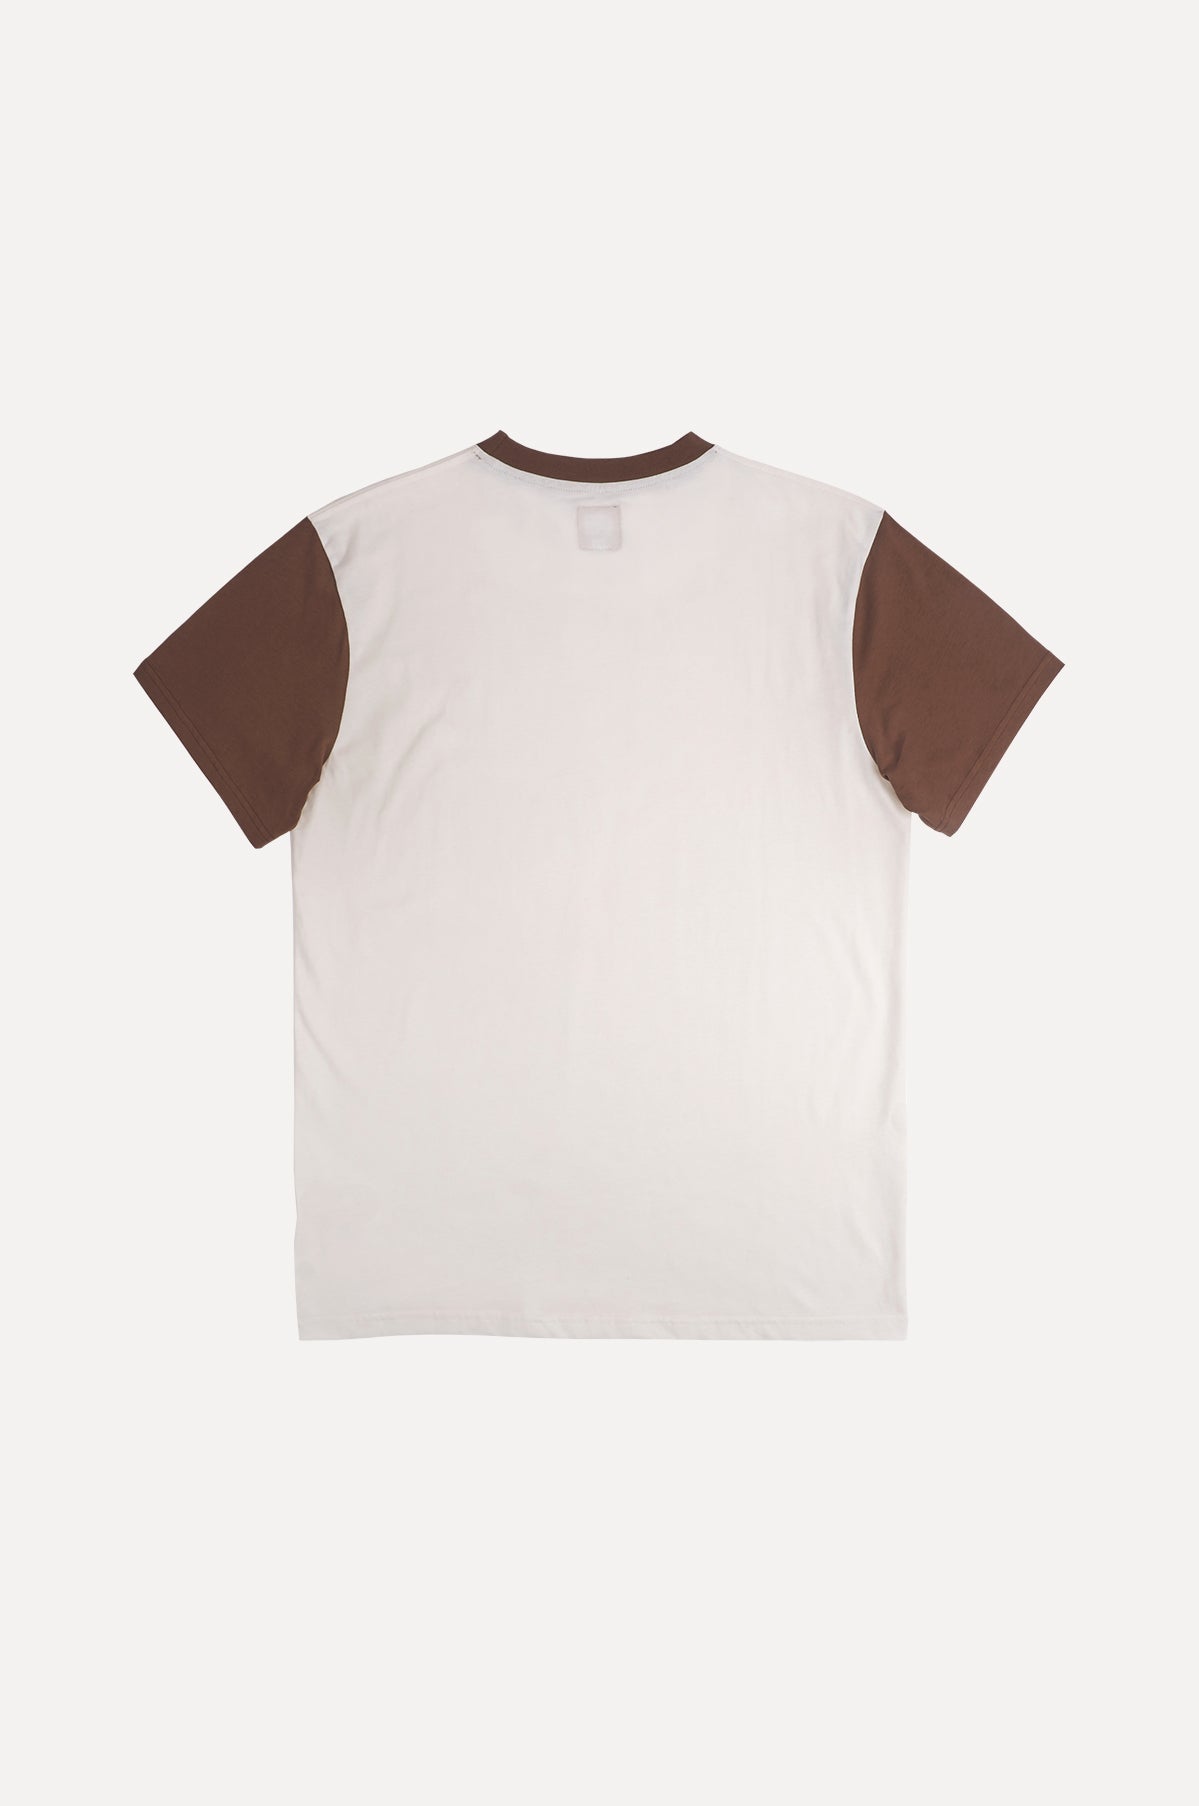 Color Block T-Shirt Cocoa Brown